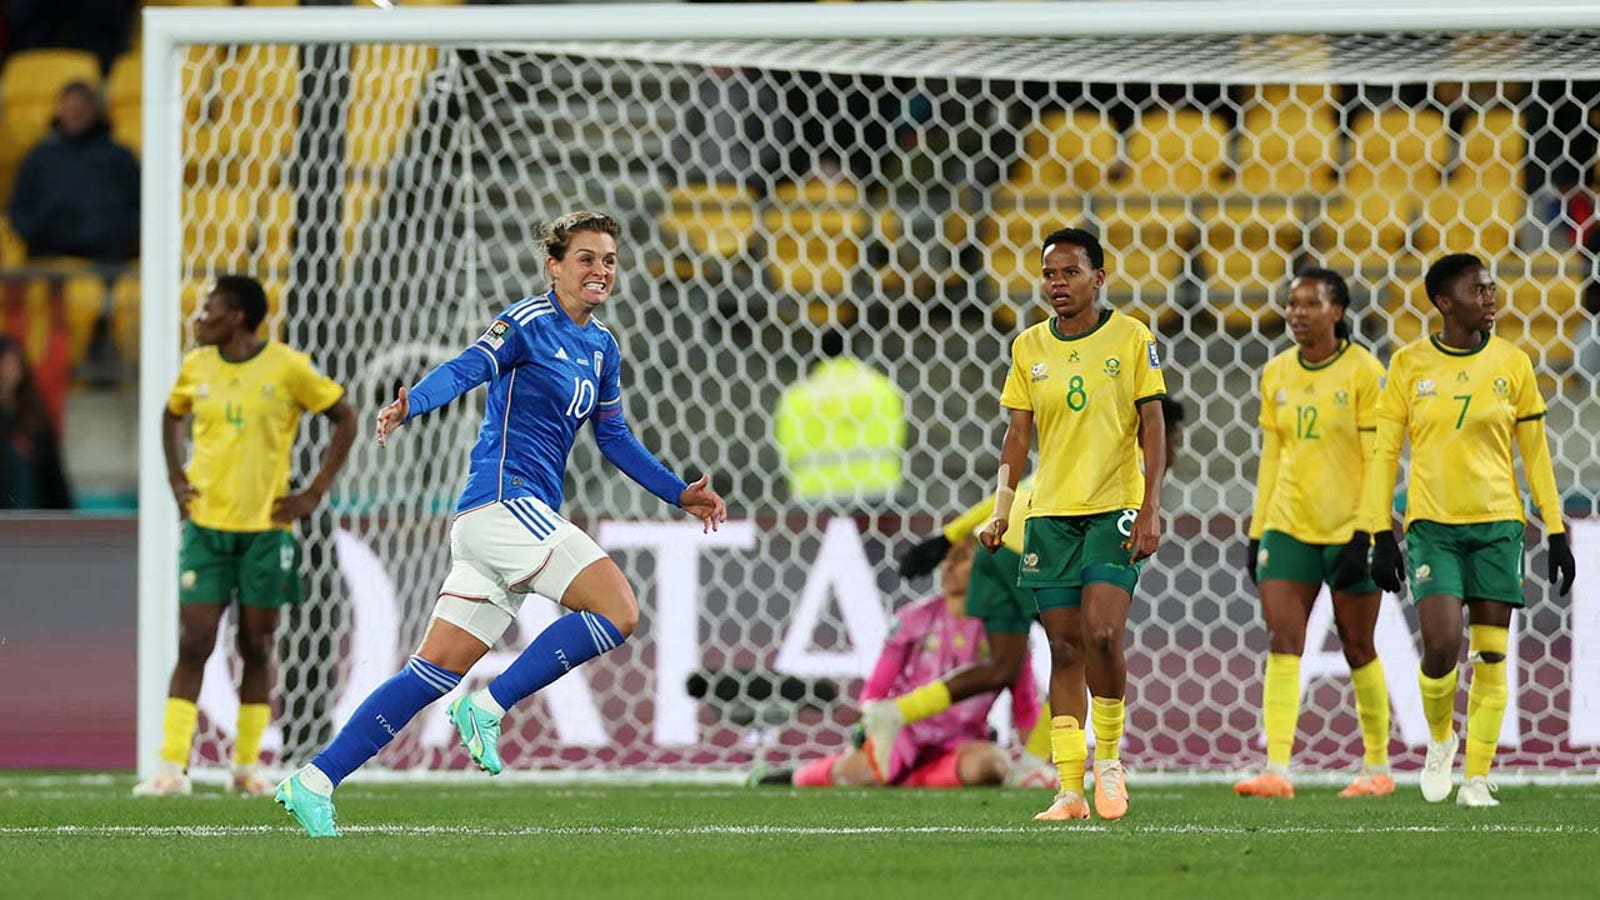 Italy's Cristiana Girelli scores goal vs. South Africa in 74'